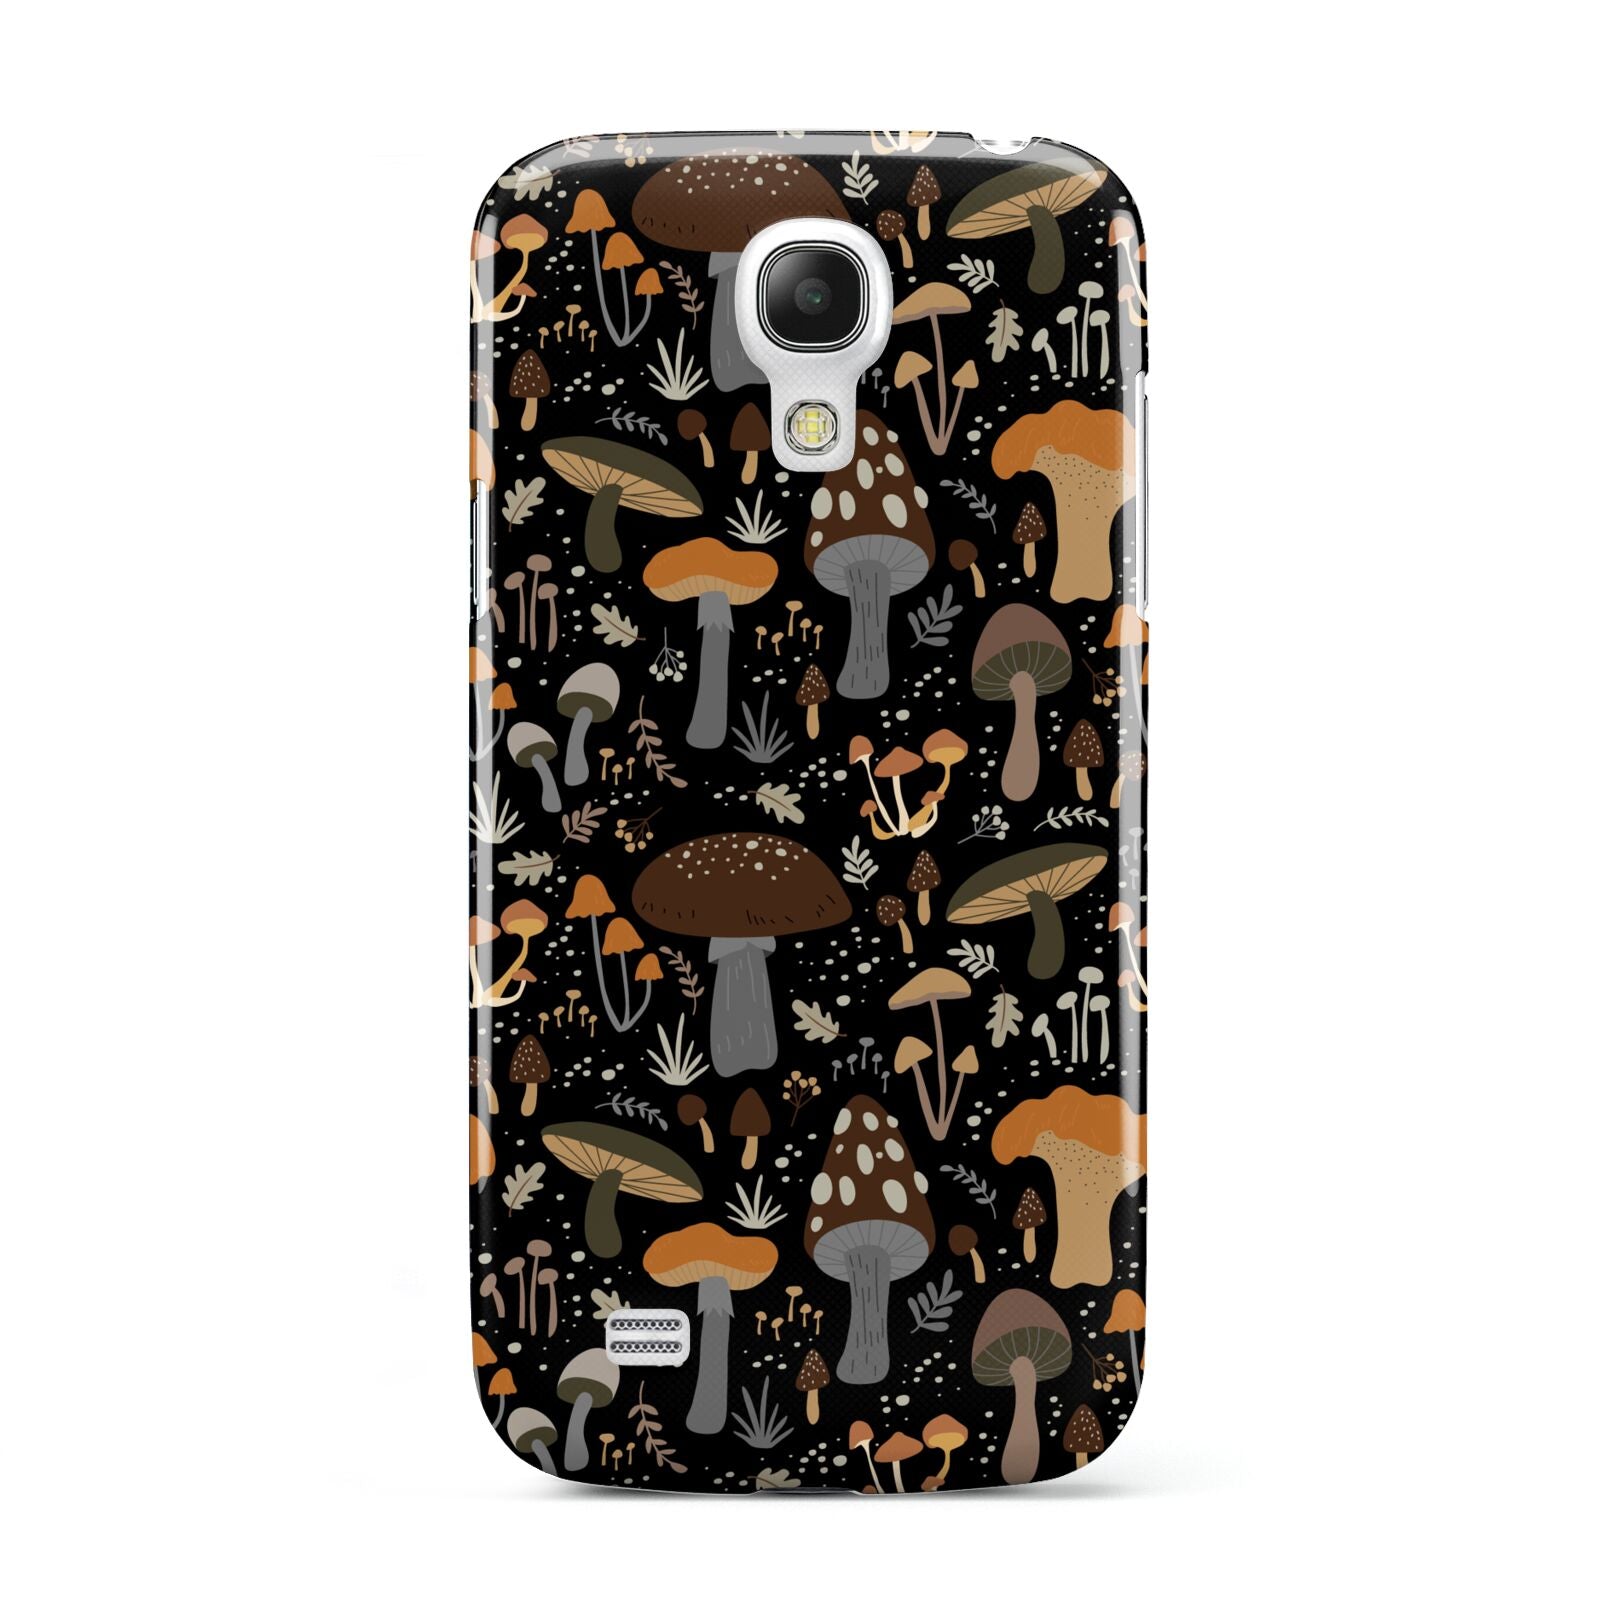 Mushroom Samsung Galaxy S4 Mini Case